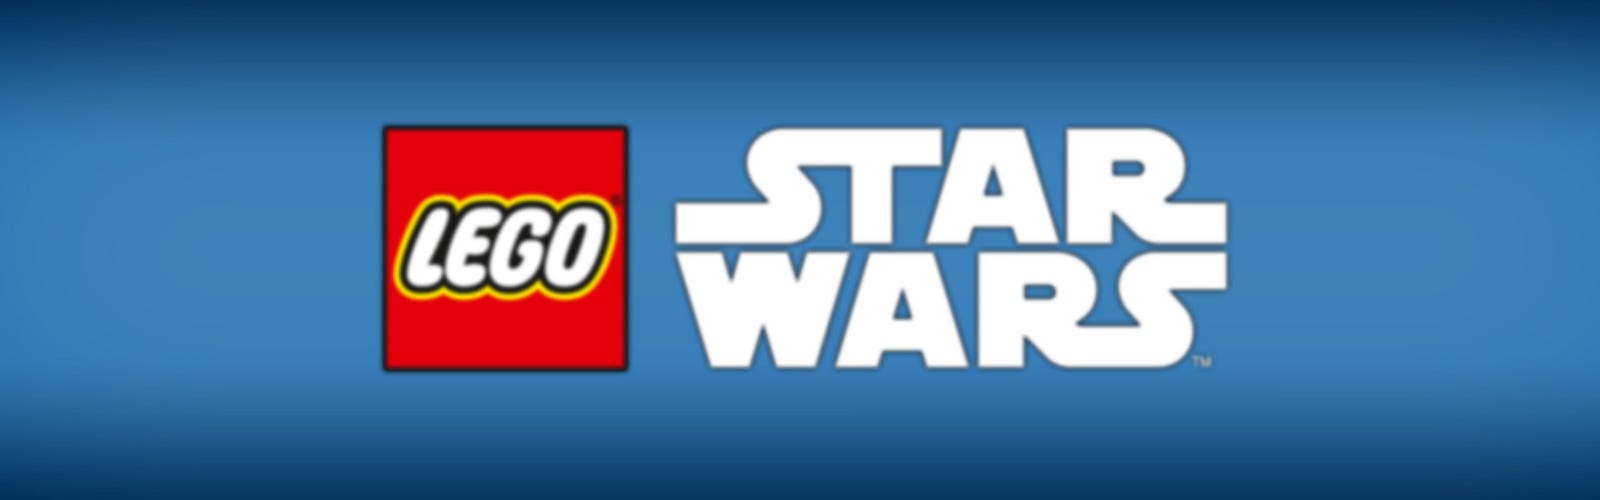 lego star wars logo png